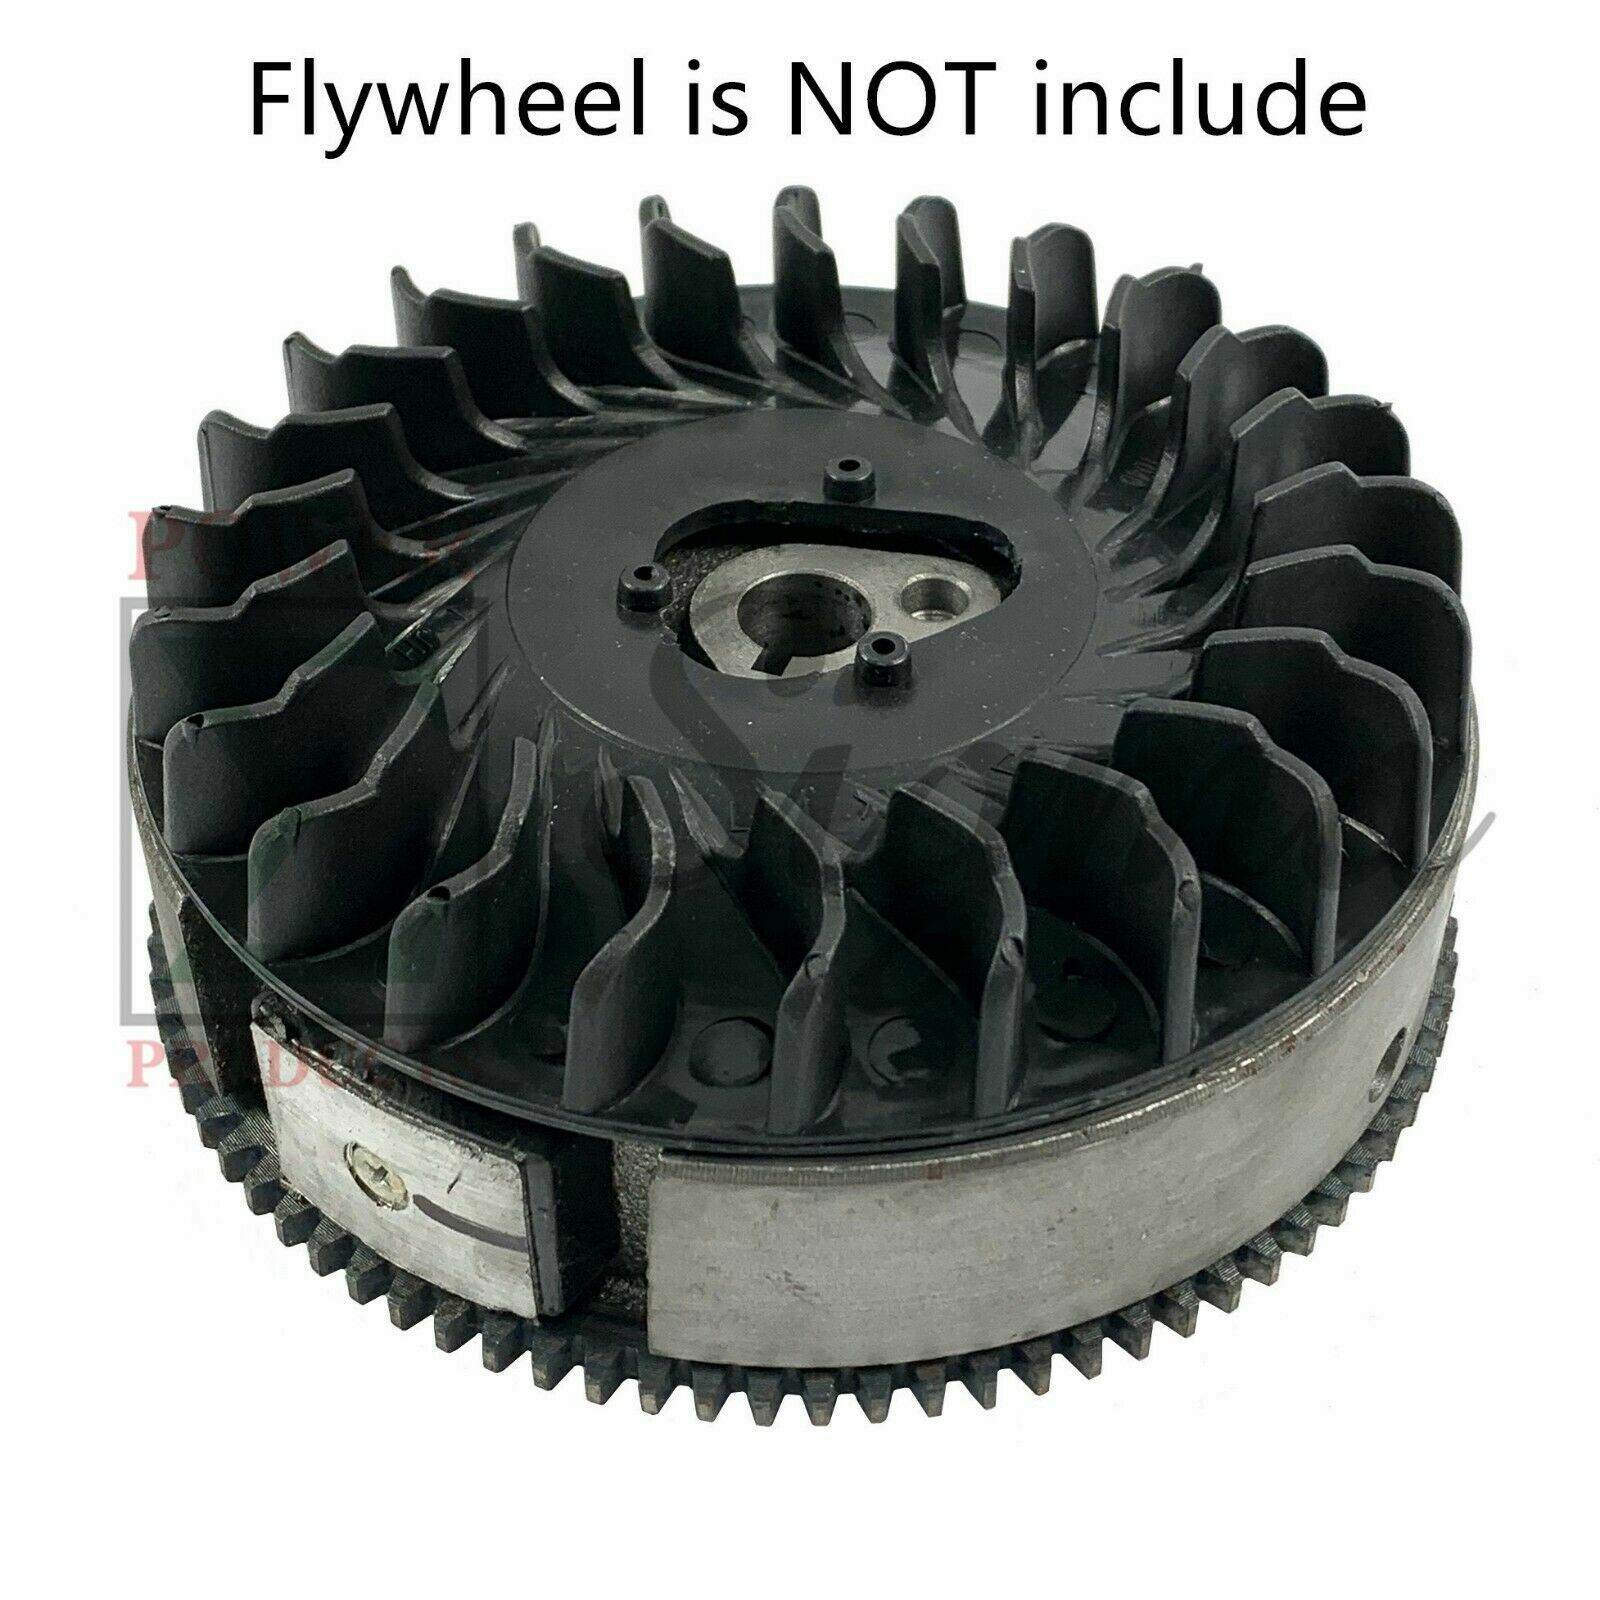 Flywheel Cooling Fan For Predator 212 CC 6.5 HP Gas Engine 69730 60363 69727 USA